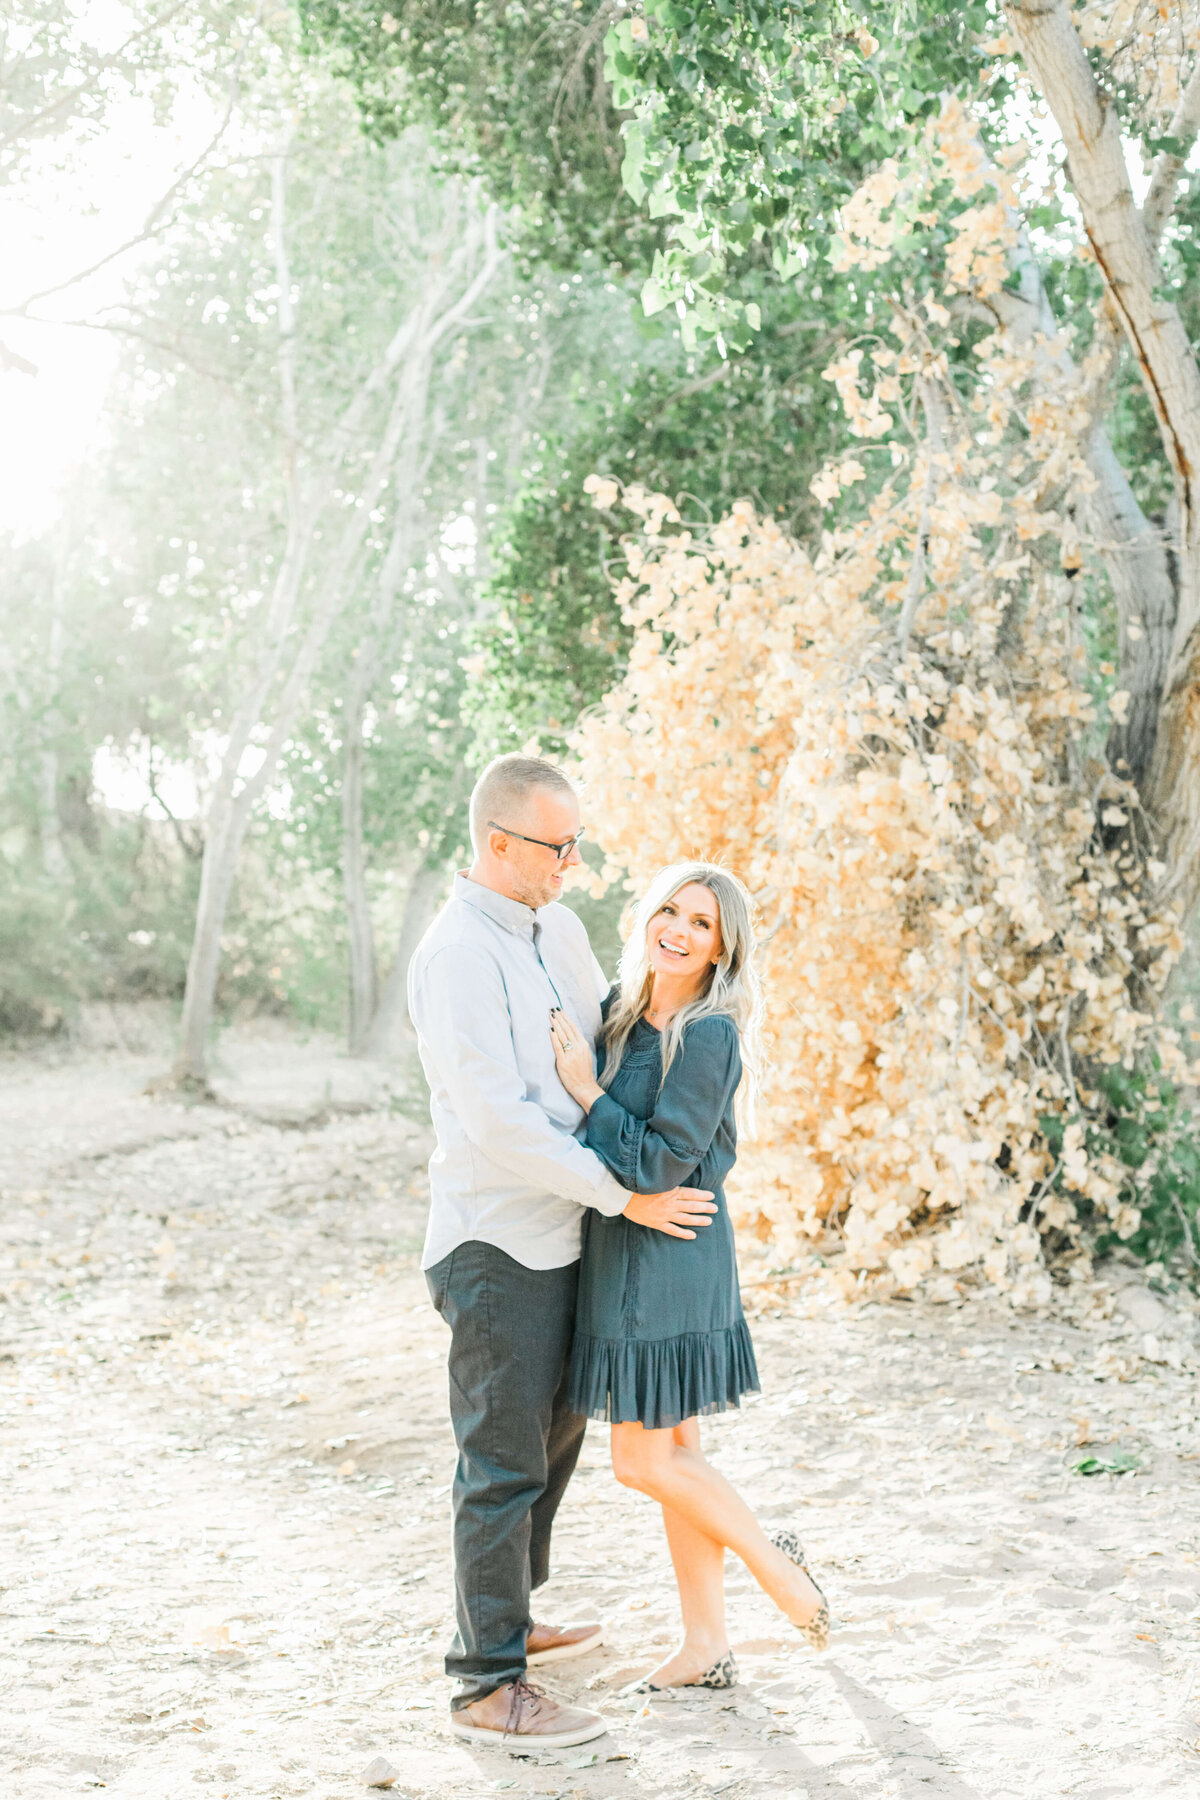 Arizona Couple, Family and Senior Photography - Bethie Grondin0001